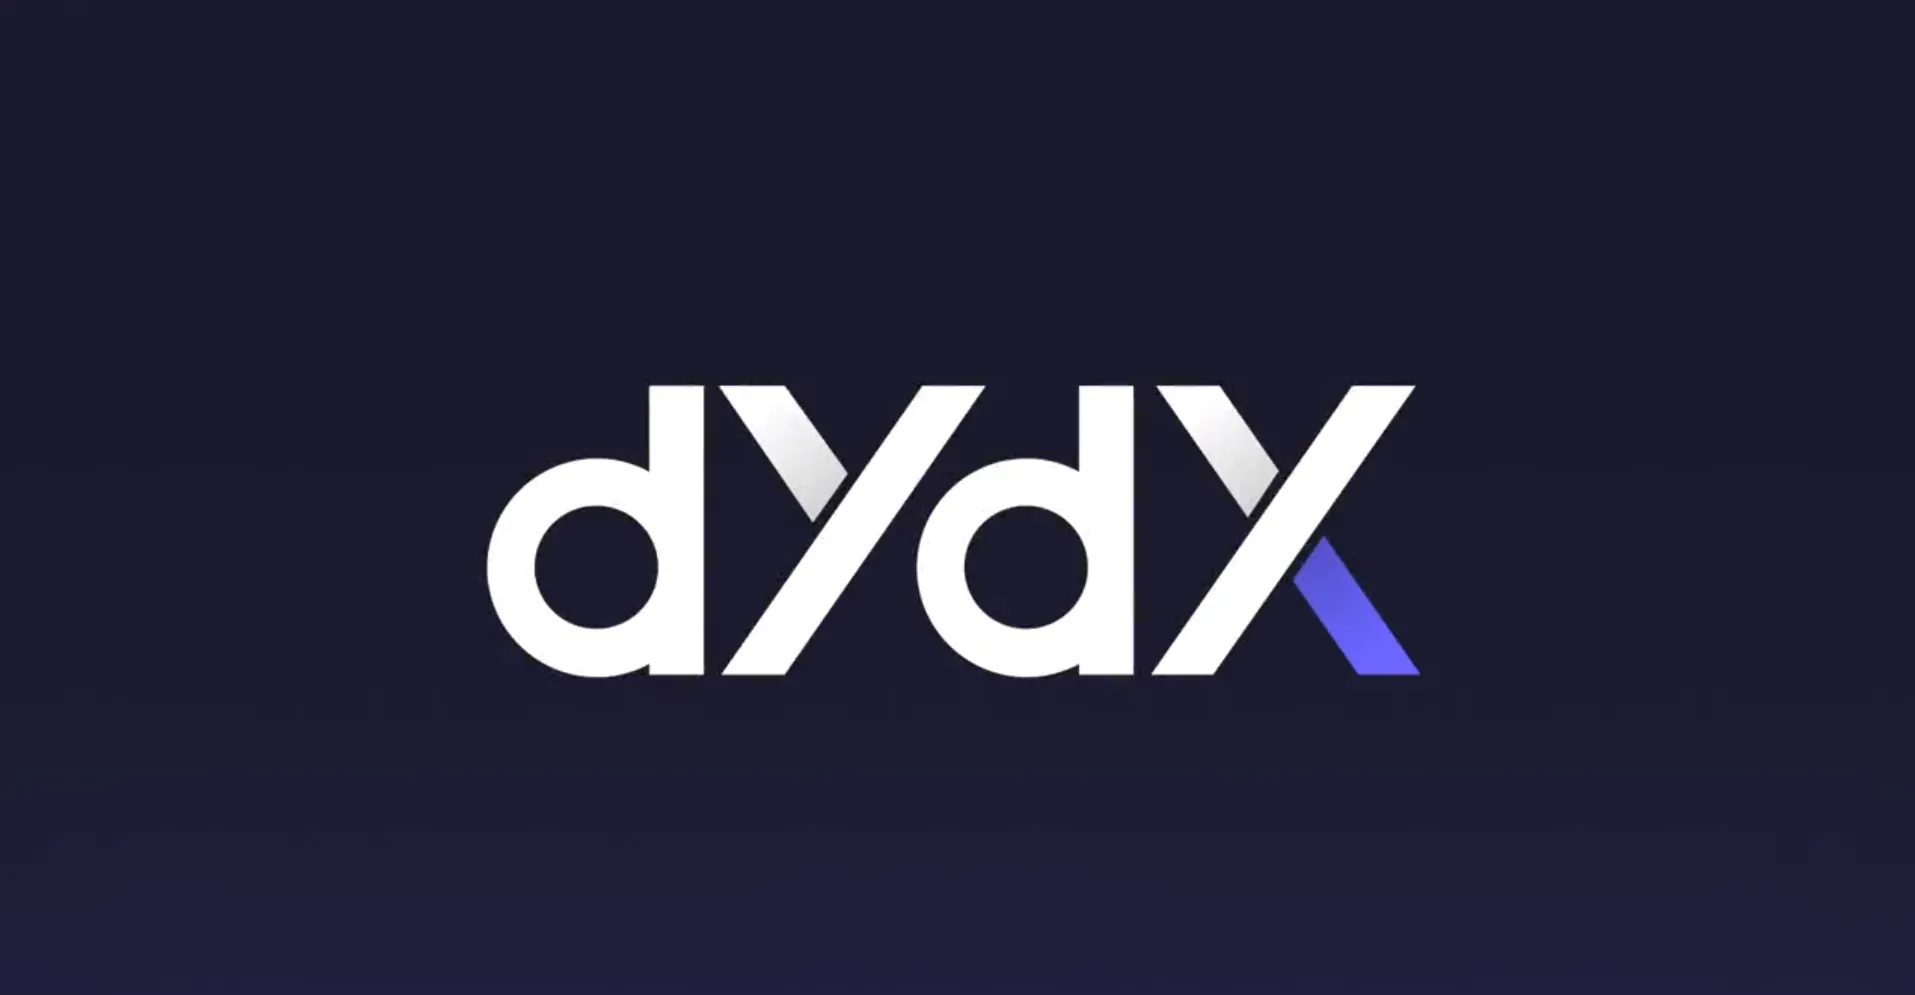 MT Capital Insight：应用链迁移和经济模型更新 推动 DYDX 飞轮增长